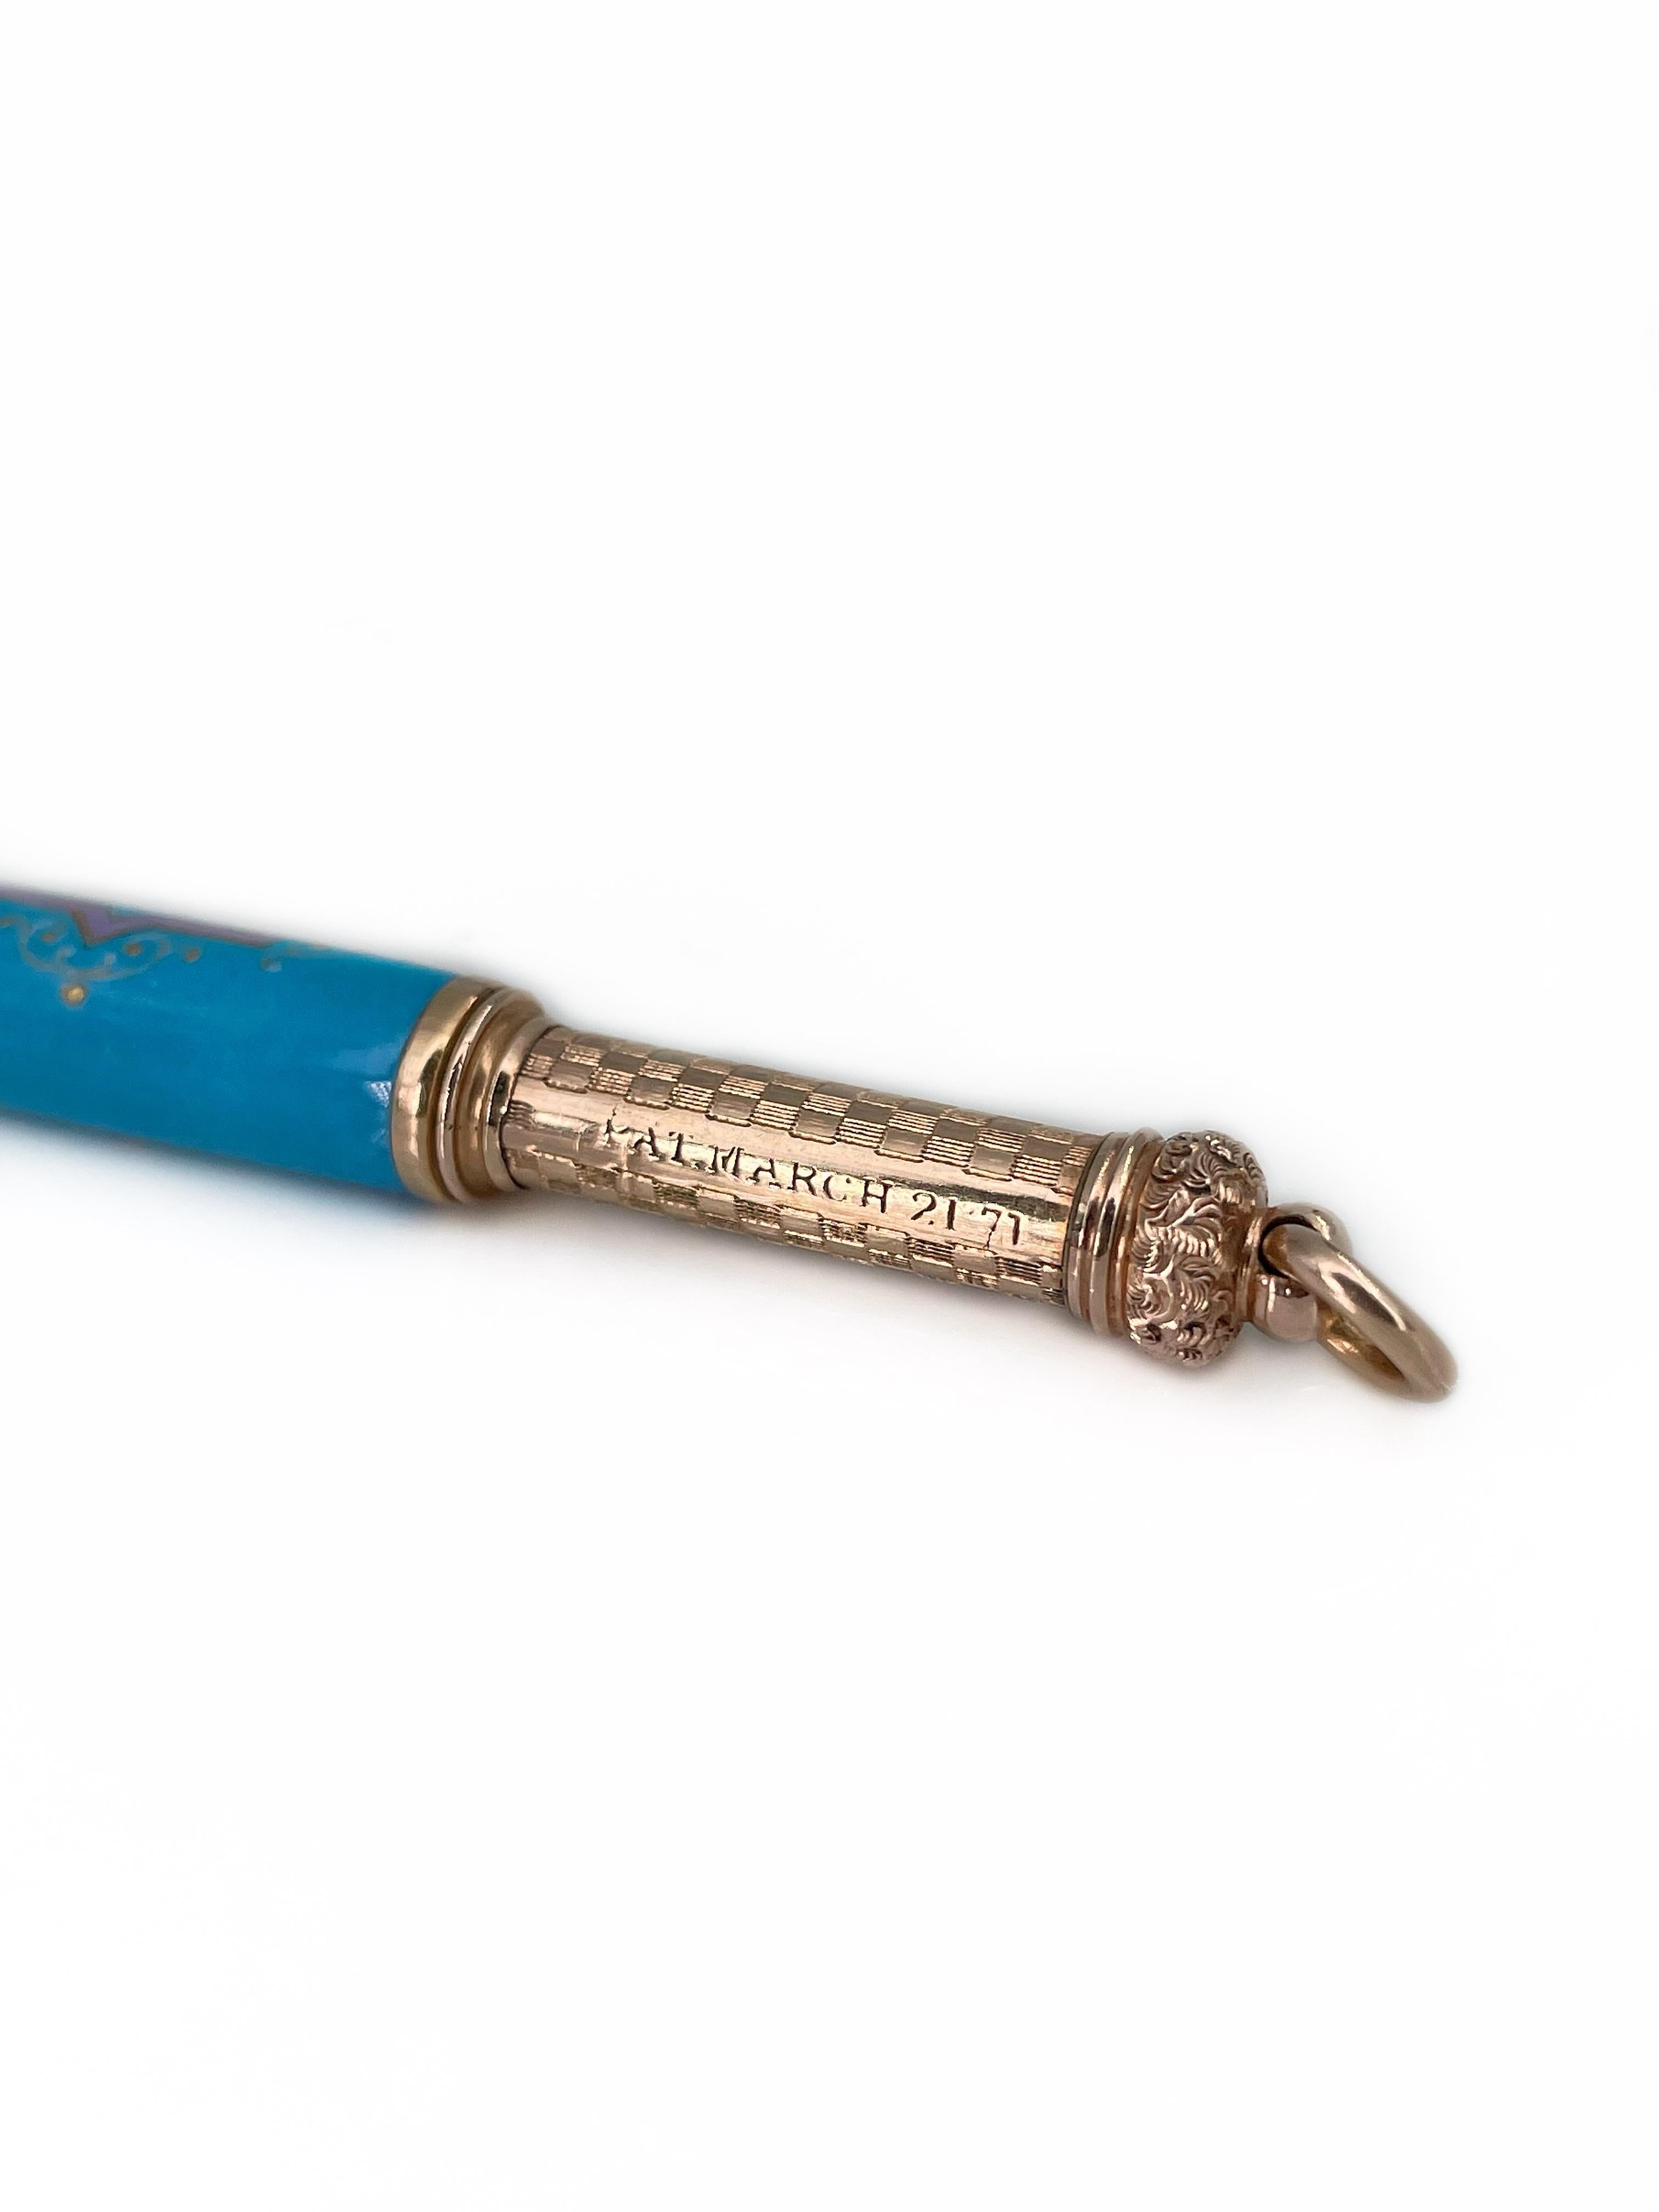 1870s L. W. Fairchild Rolled Gold Floral Enamel Propelling Pencil Pendant For Sale 3